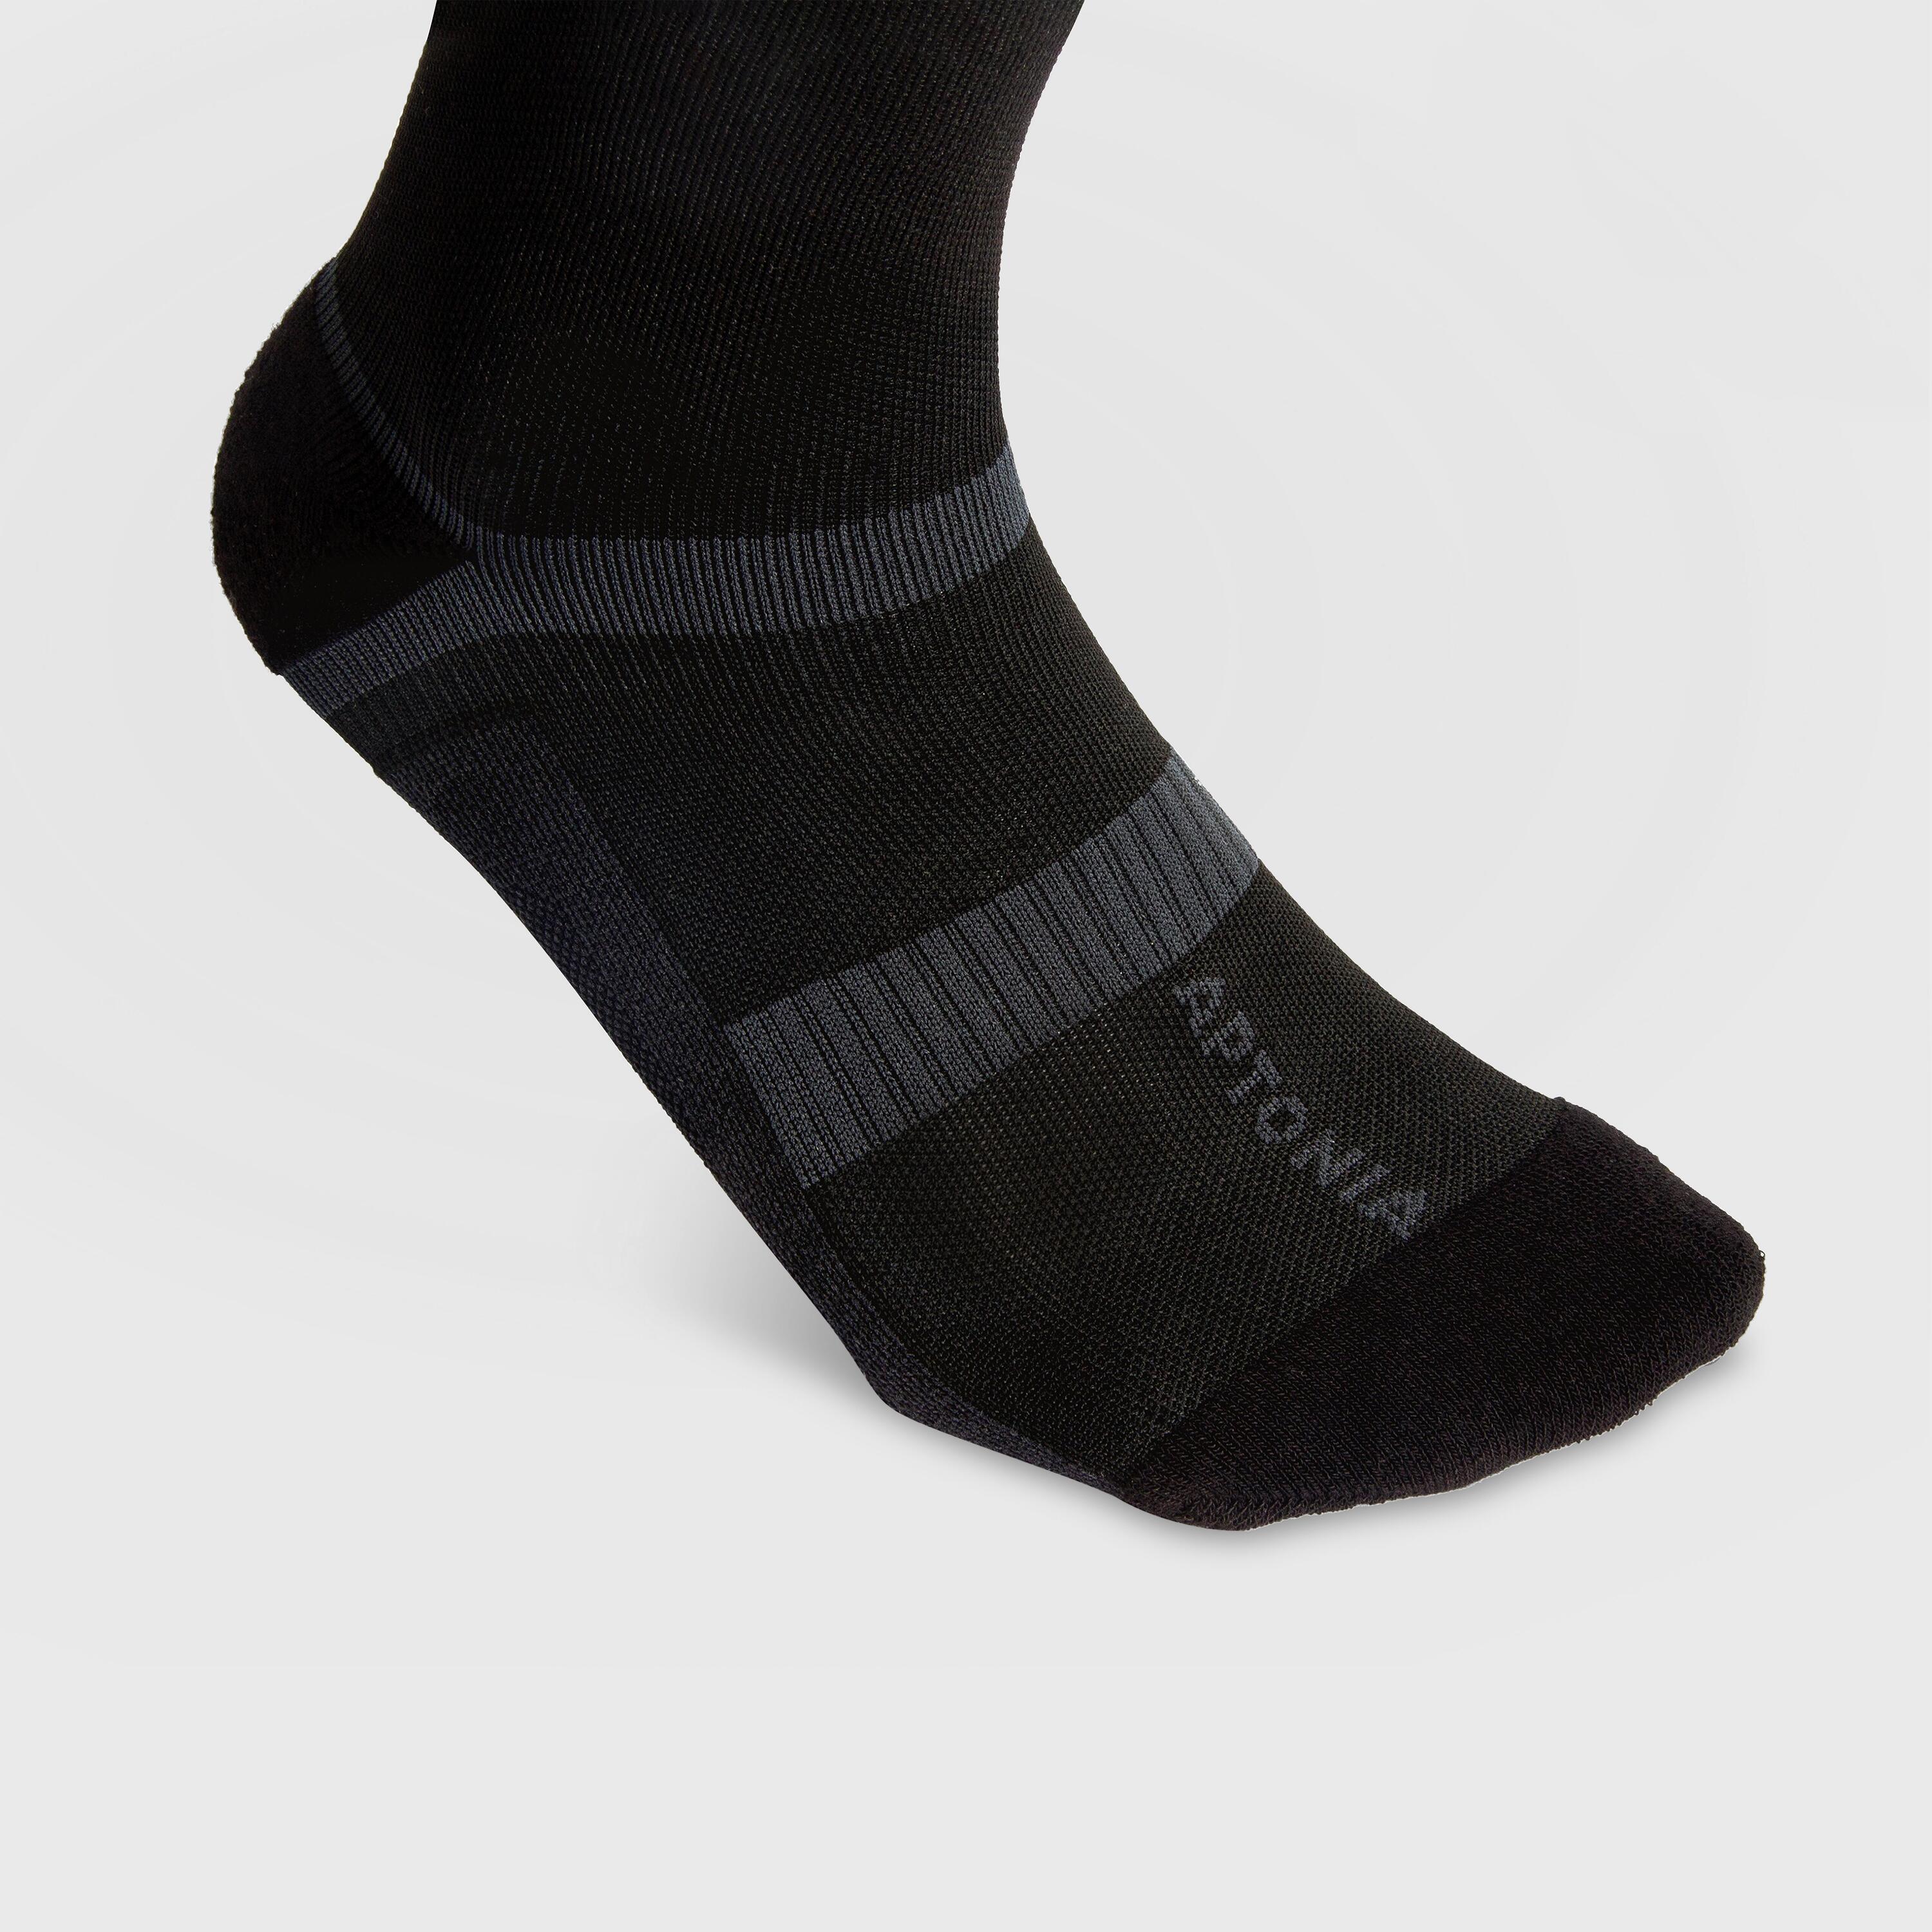 Compression socks - Black - Decathlon - Decathlon